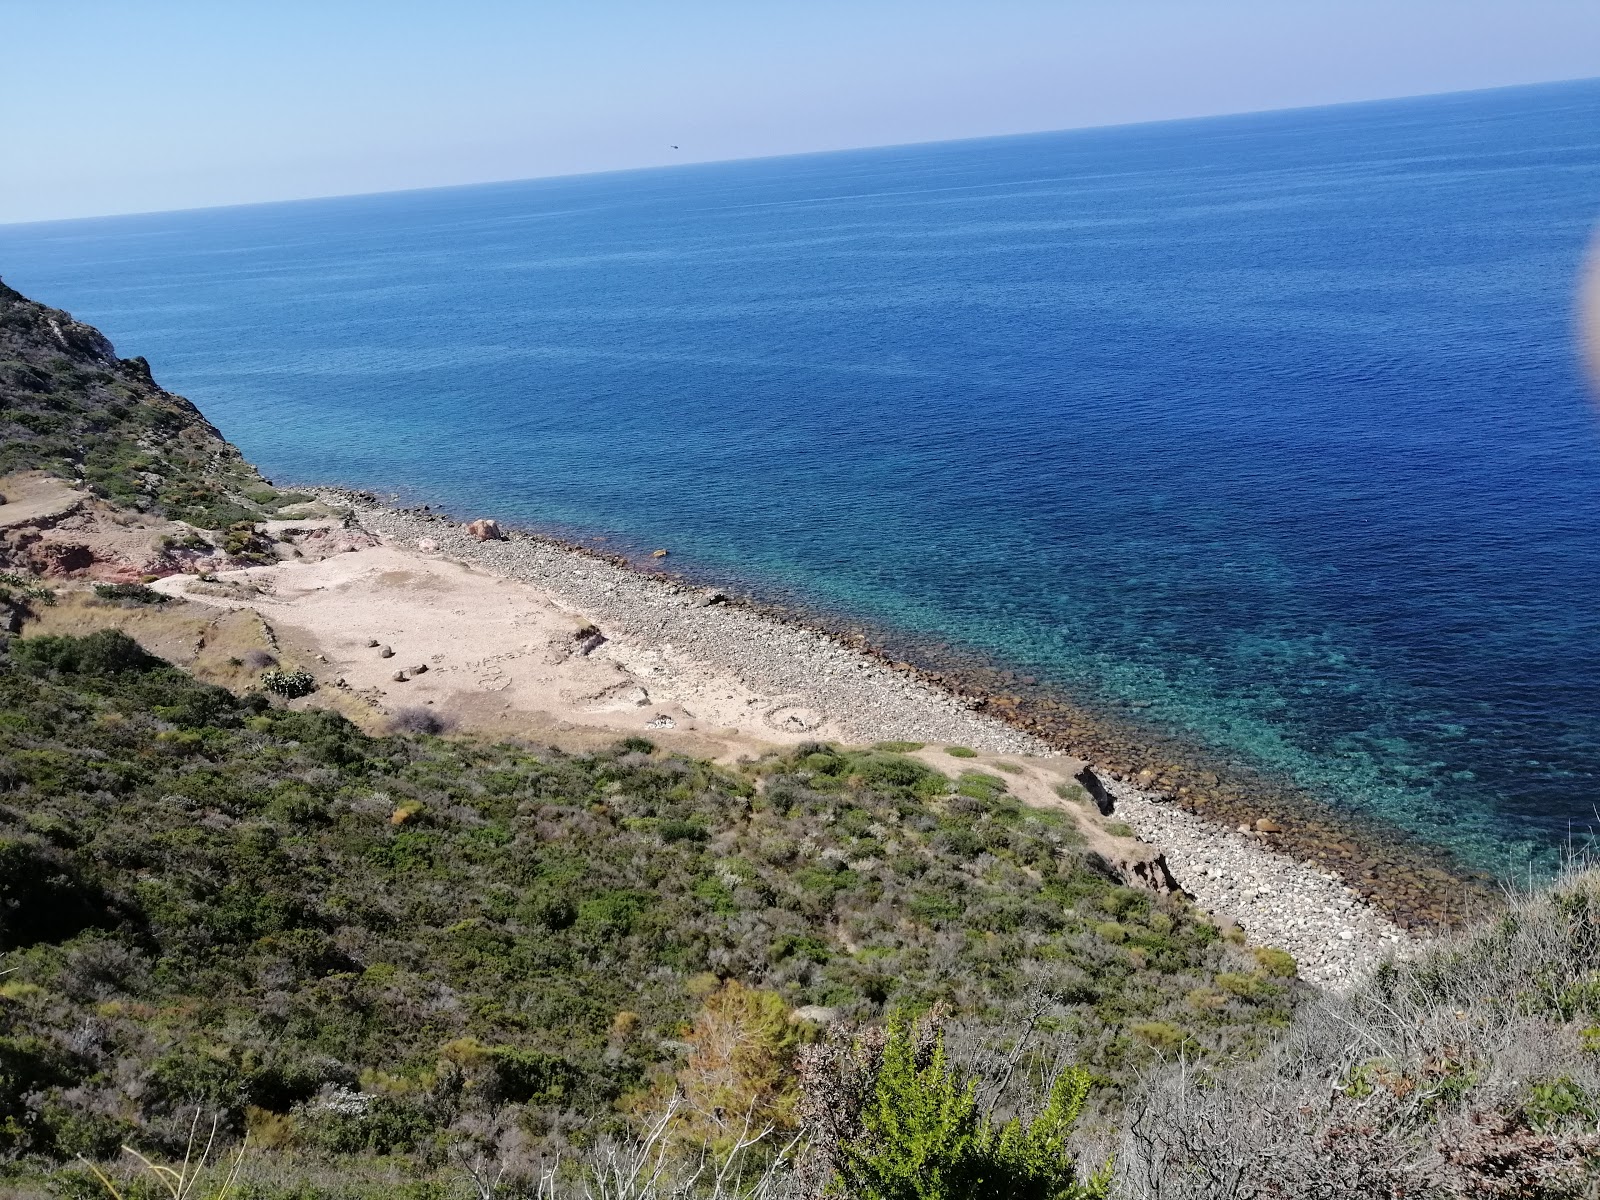 Foto von Spiaggia della Calcara mit steine Oberfläche